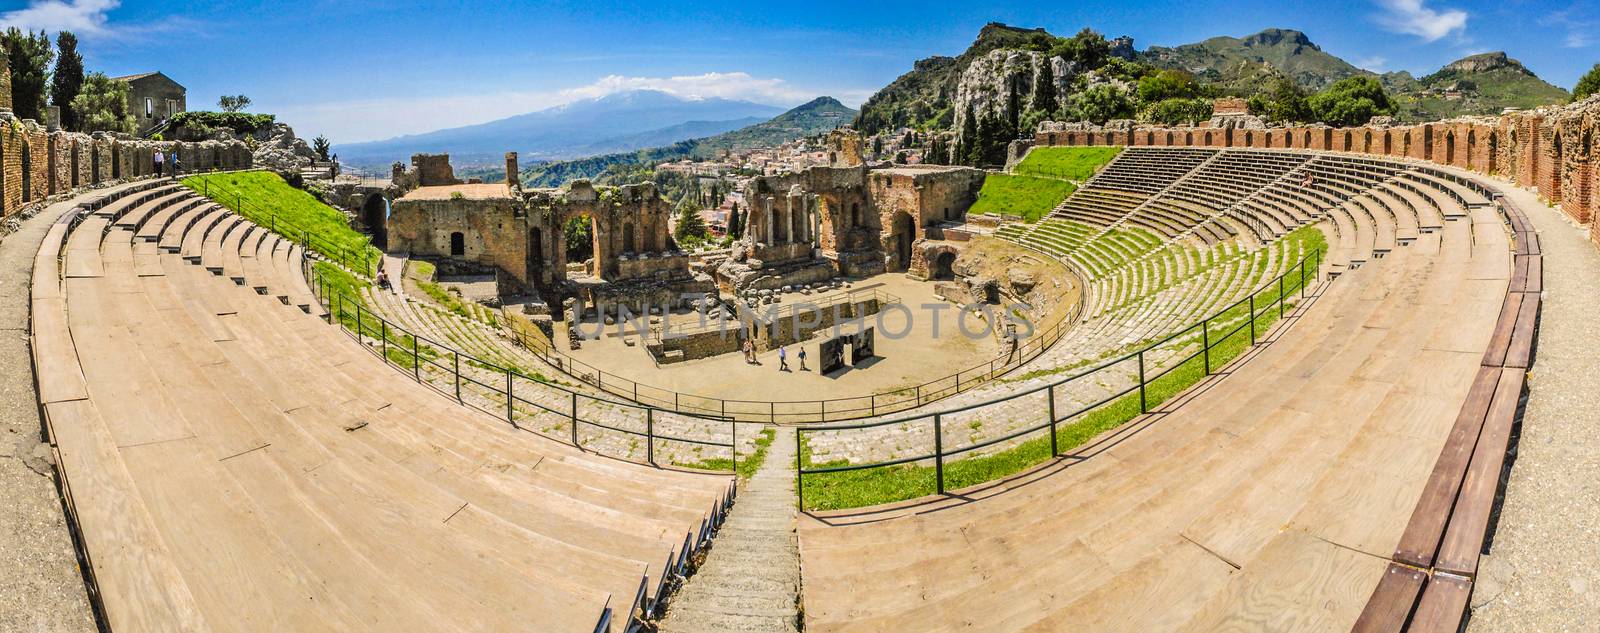 The ancient roman theatre in Taormina